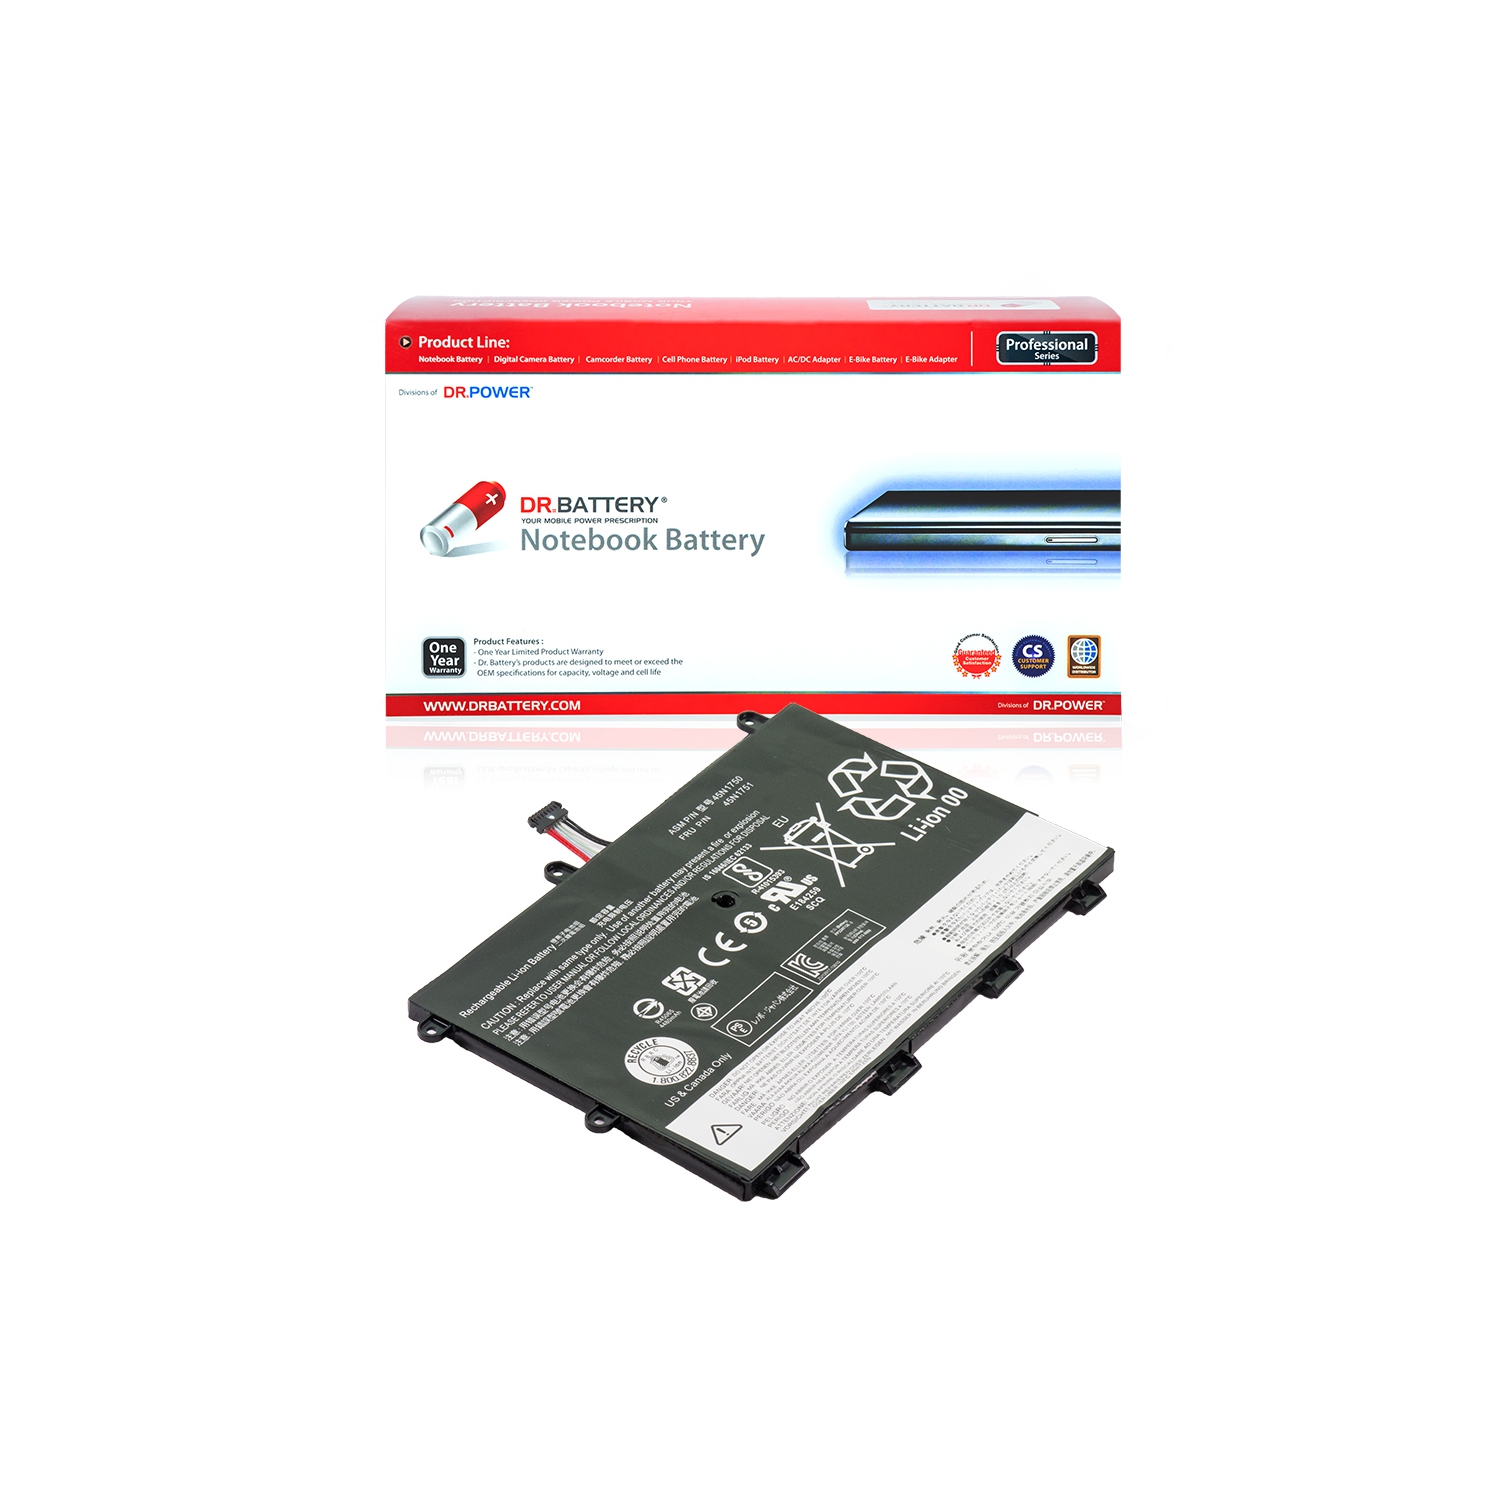 DR. BATTERY - Replacement for Lenovo ThinkPad Yoga 11e 20D9000RUS / 20D9000UUS / 20D9000VUS / 50 / 70-2 / 45N1748 / 45N1749